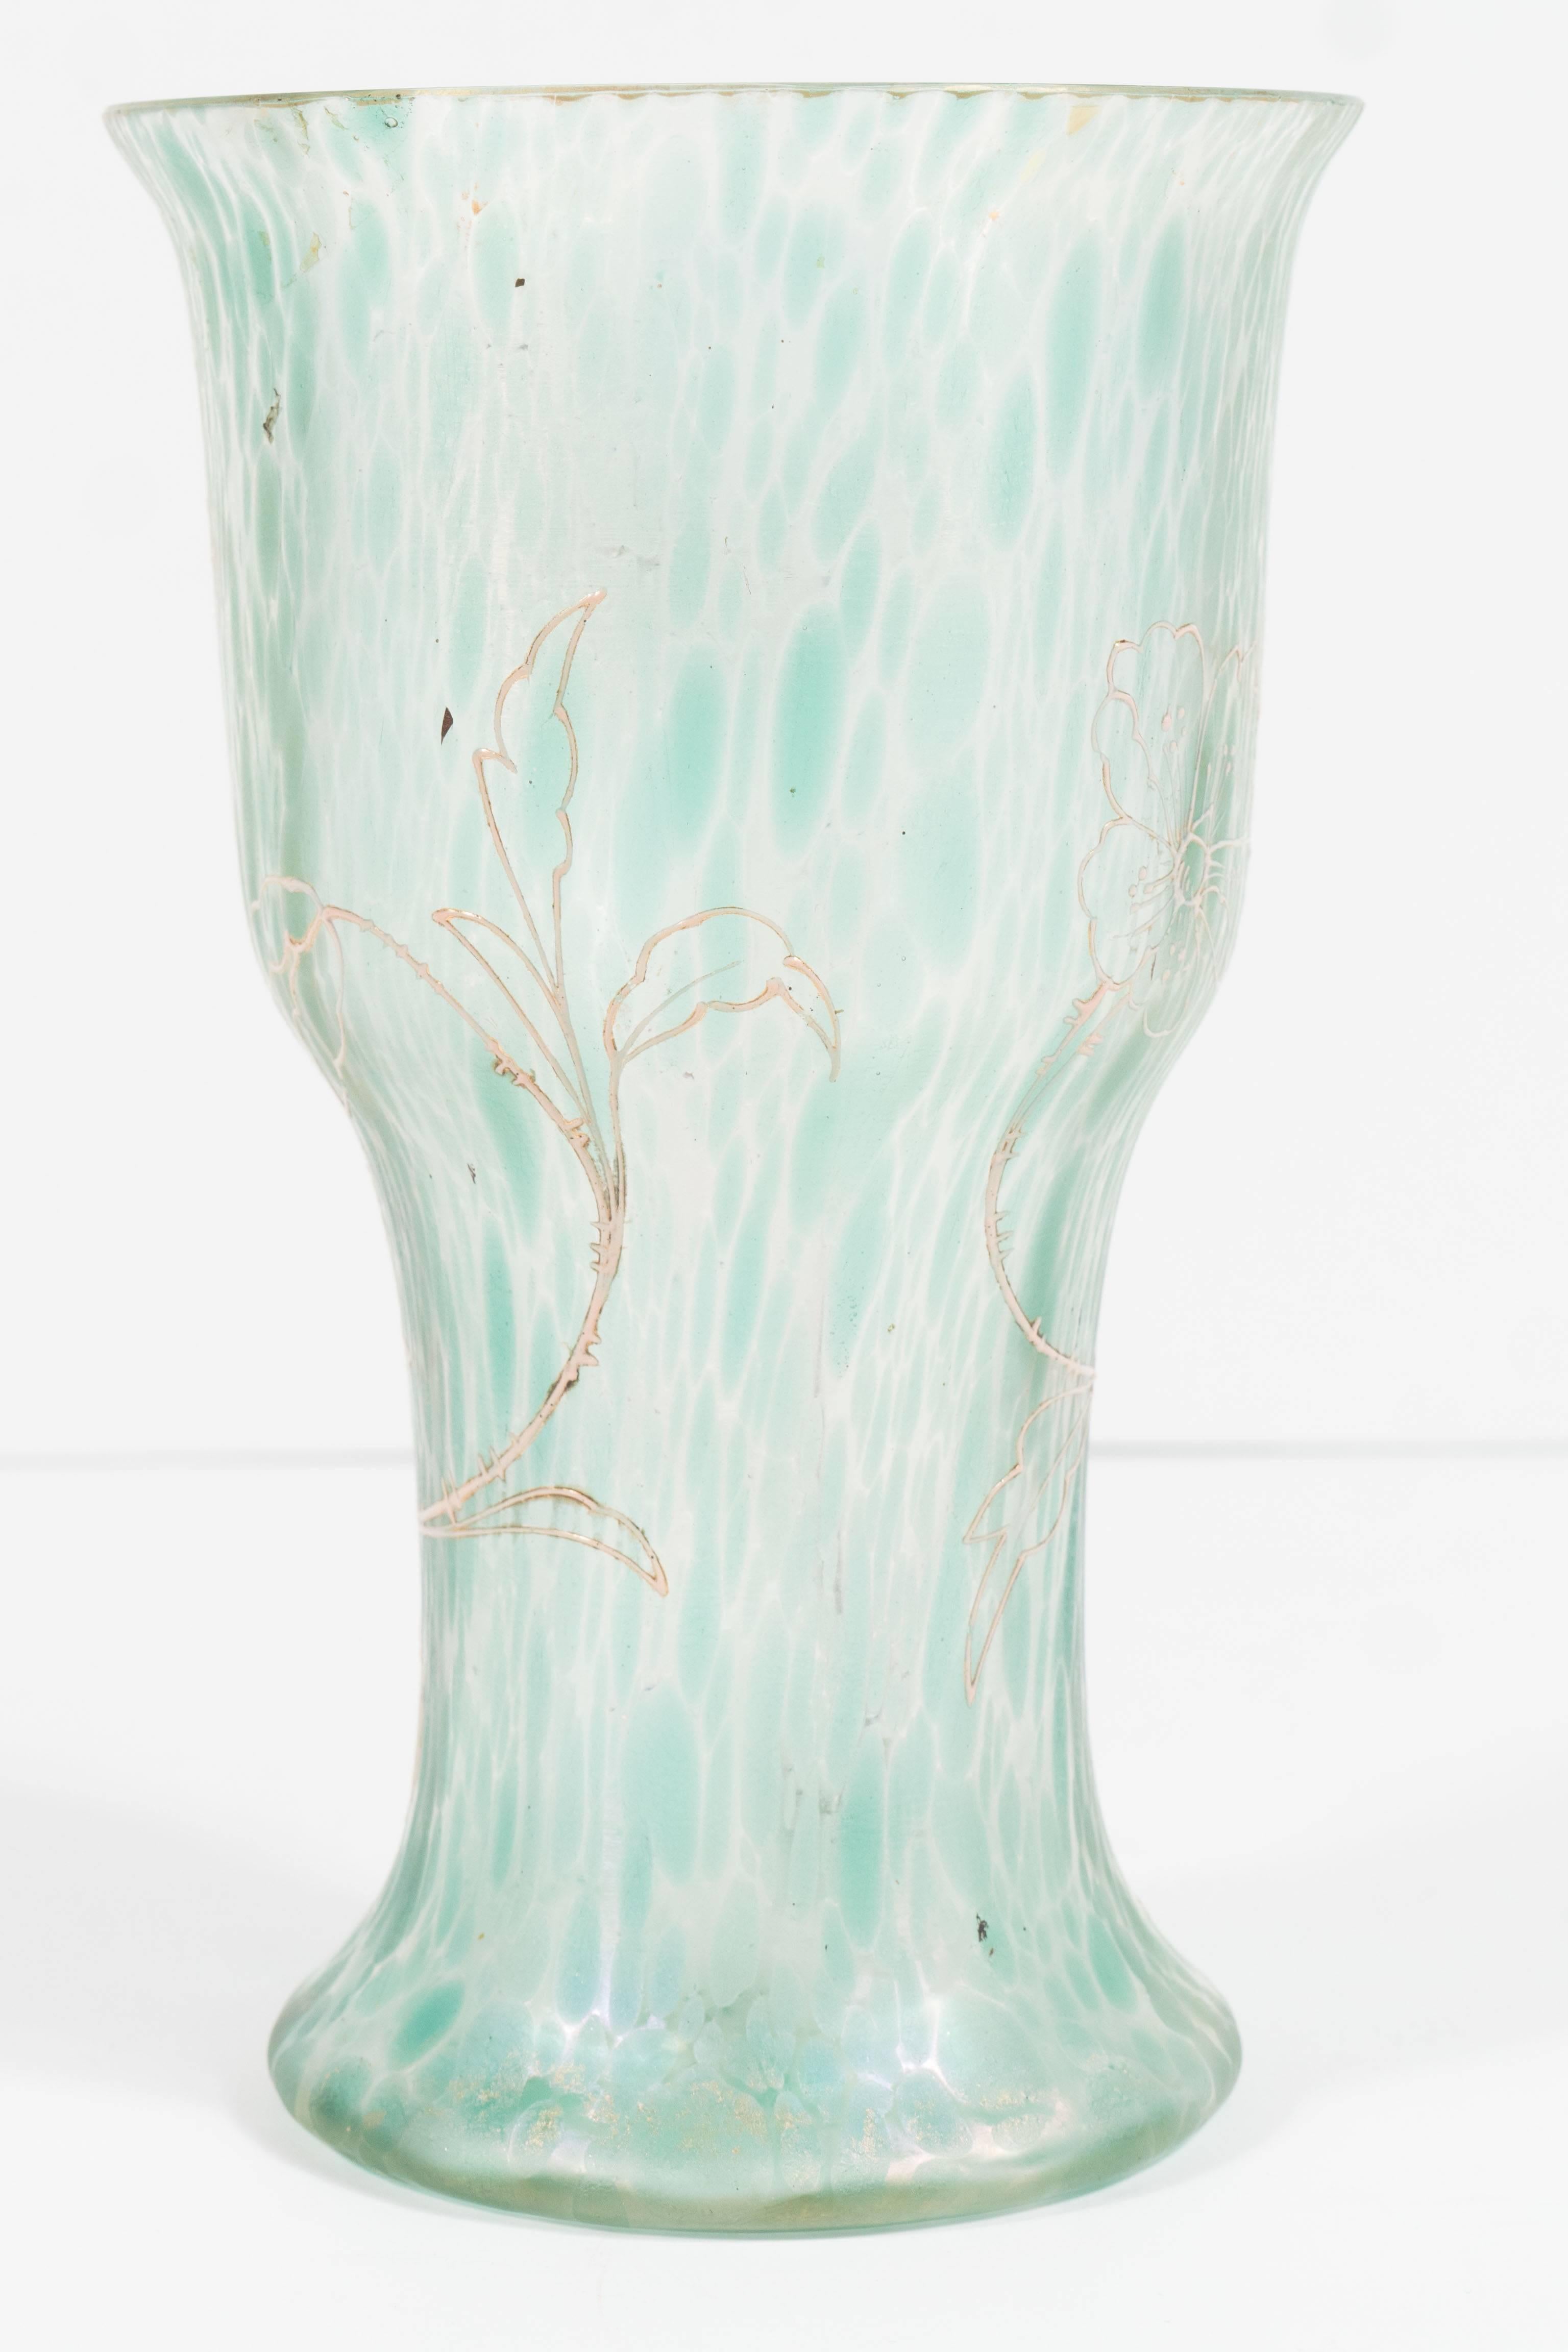 Art Nouveau Austrian Art Glass Vase in Green Iridescent and Gold Relief Vine 1